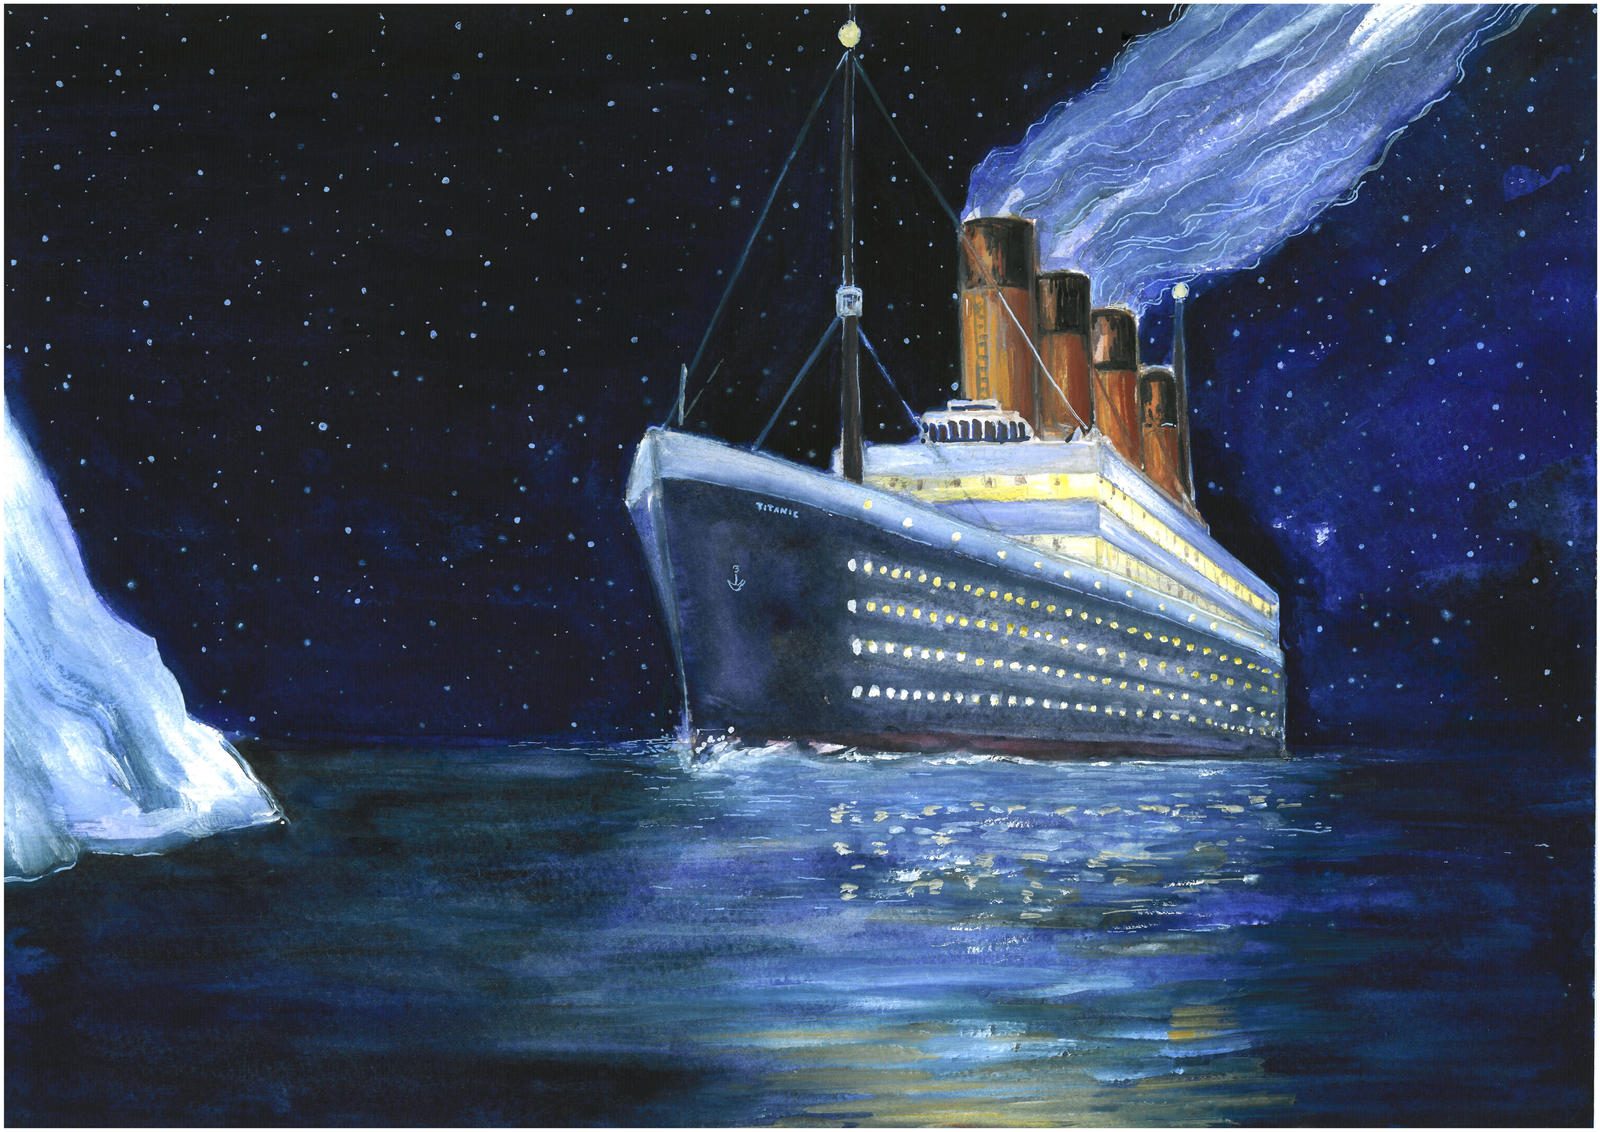 Titanic goes to eternity by MarysMirages on DeviantArt